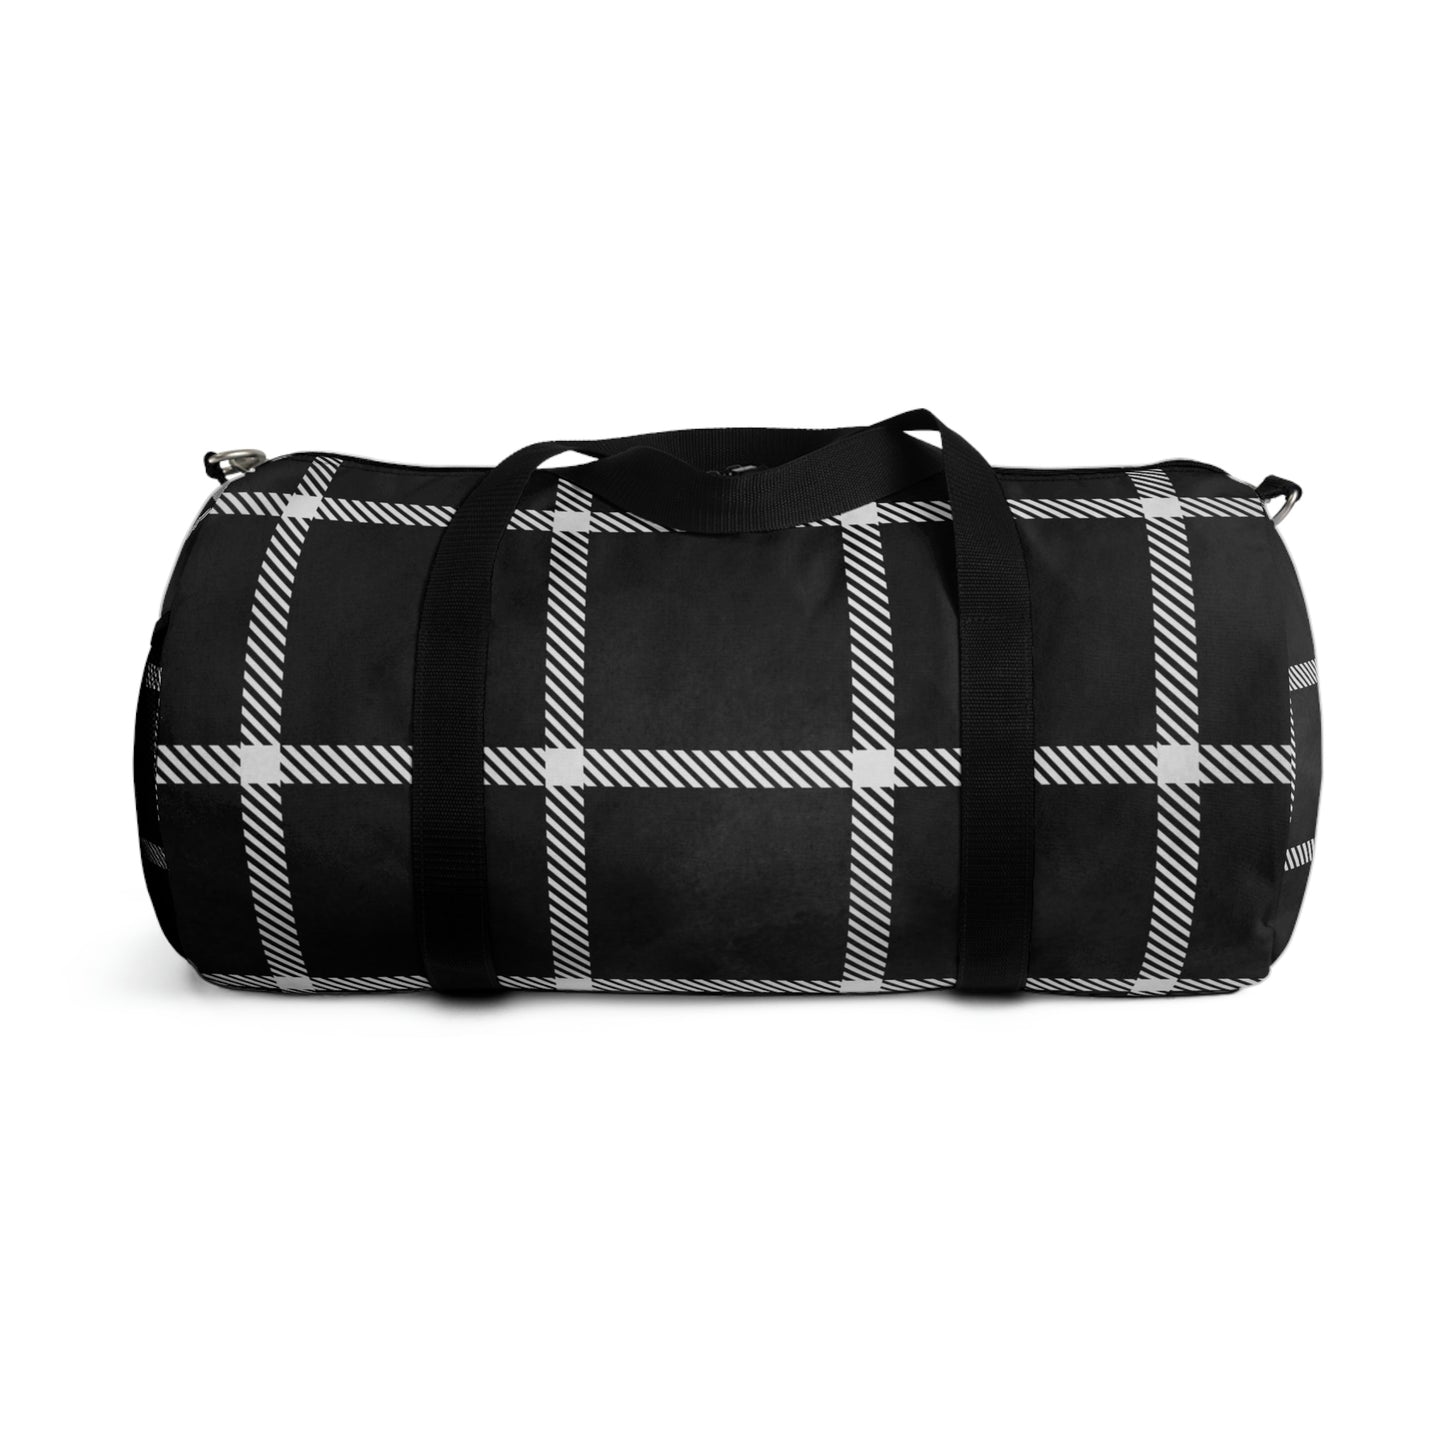 Black Check Duffle Bag, Weekender Duffle Bag, Carry on Travel Overnight Canvas Duffel Bag